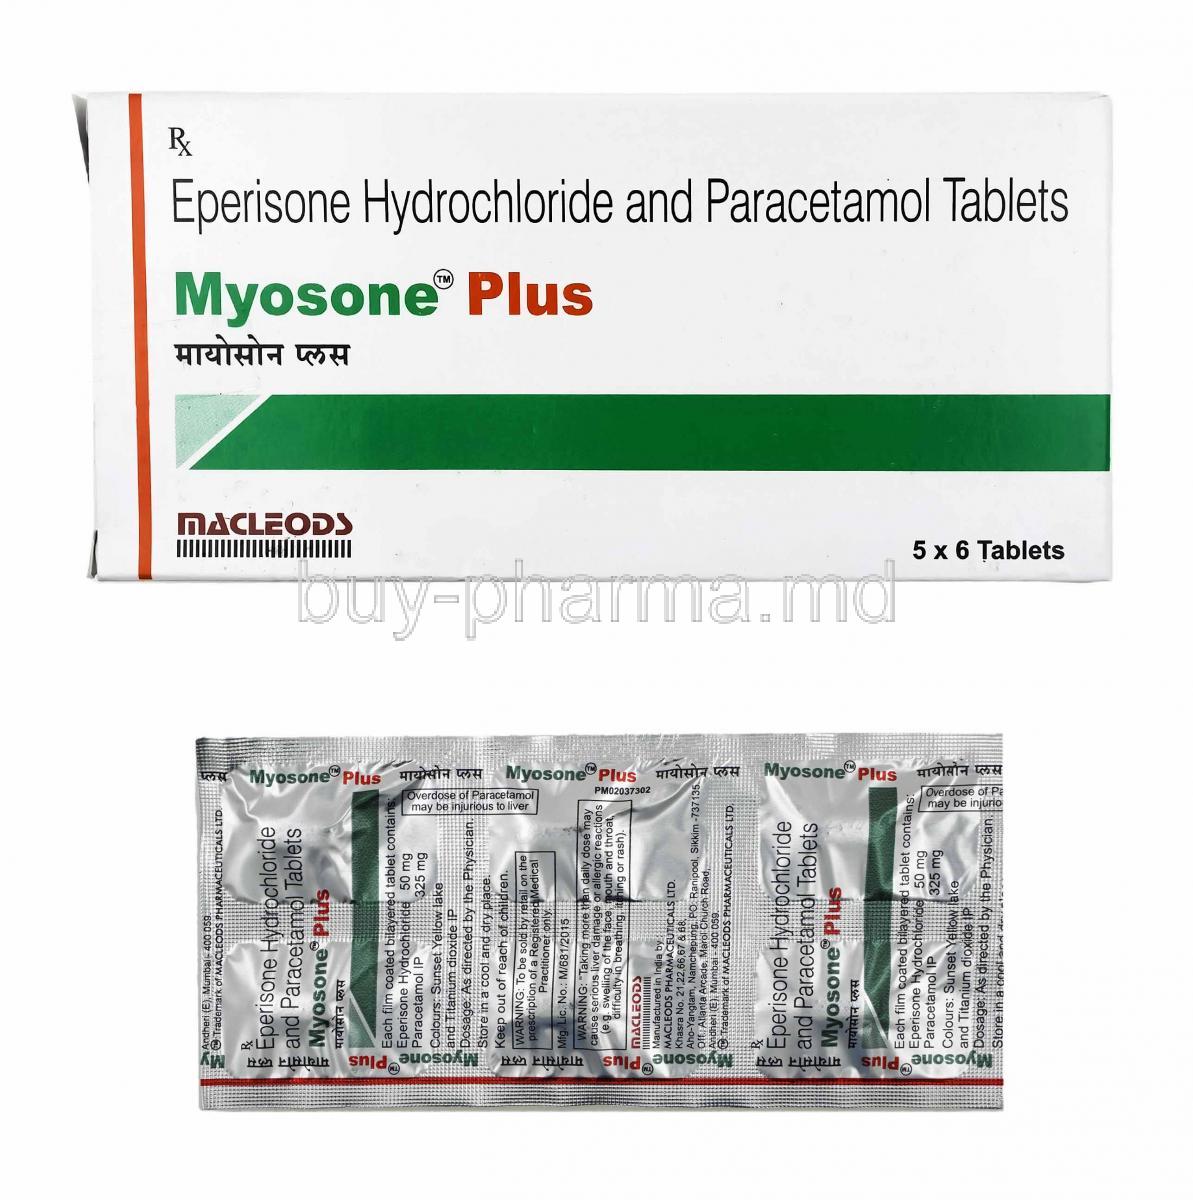 Myosone Plus, Eperisone and Paracetamol box and tablets